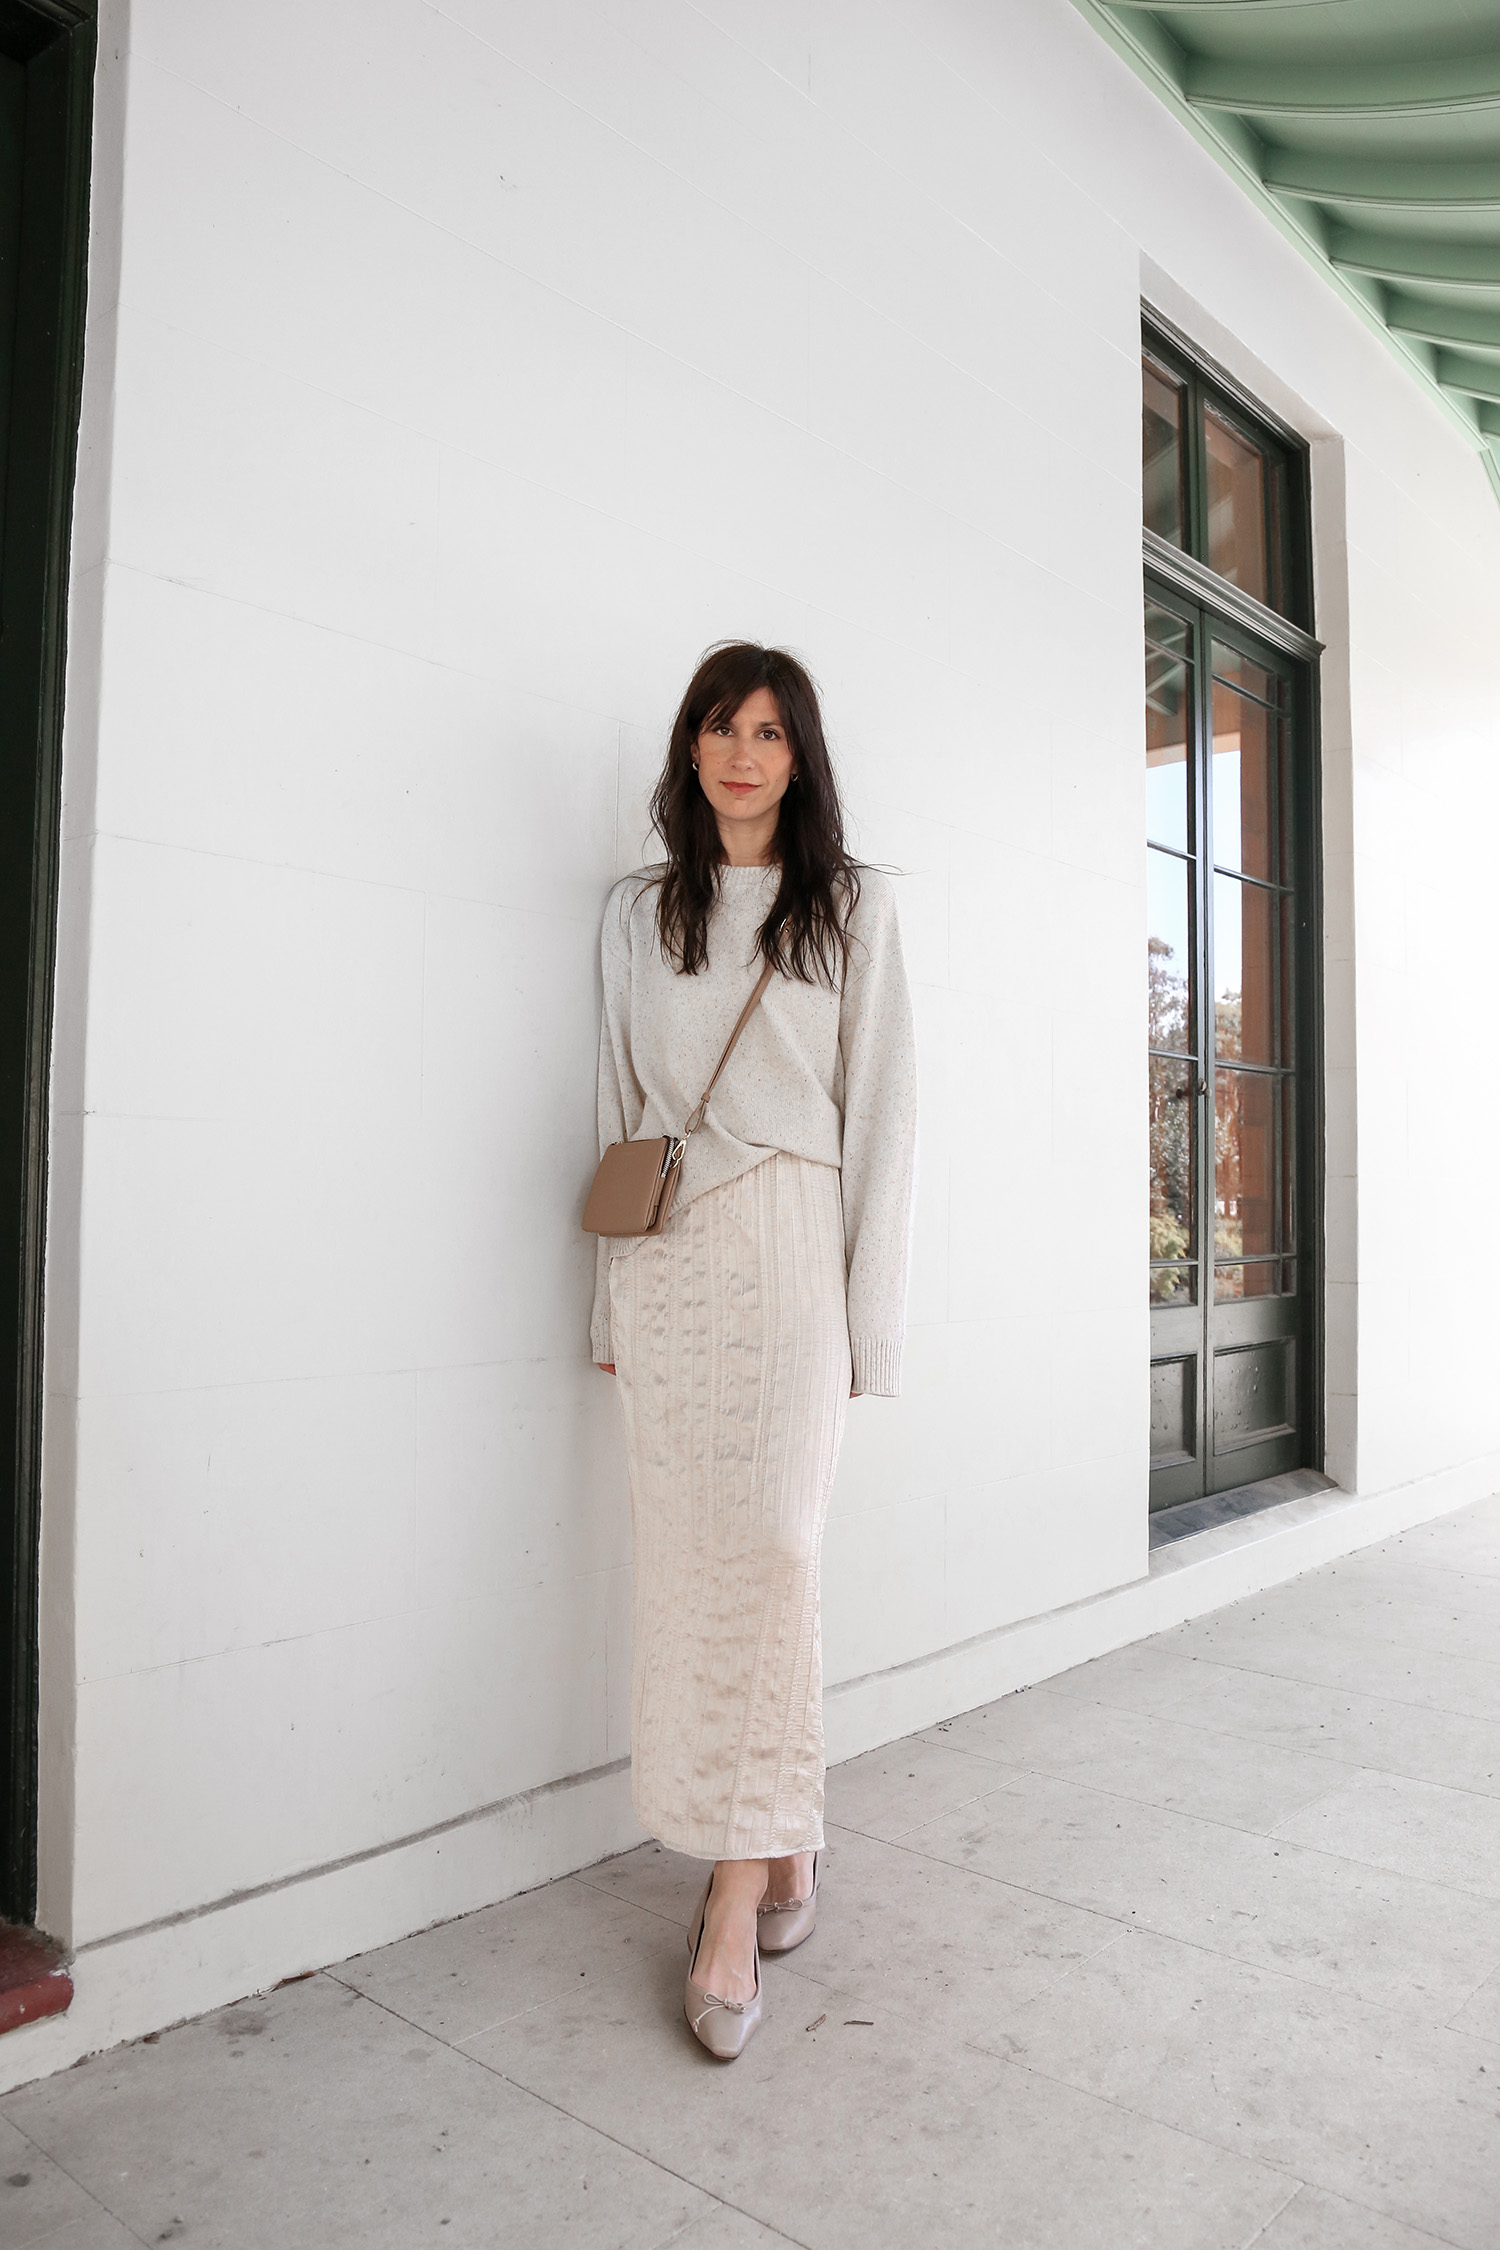 Neutral outfit elegant minimal Parisian chic